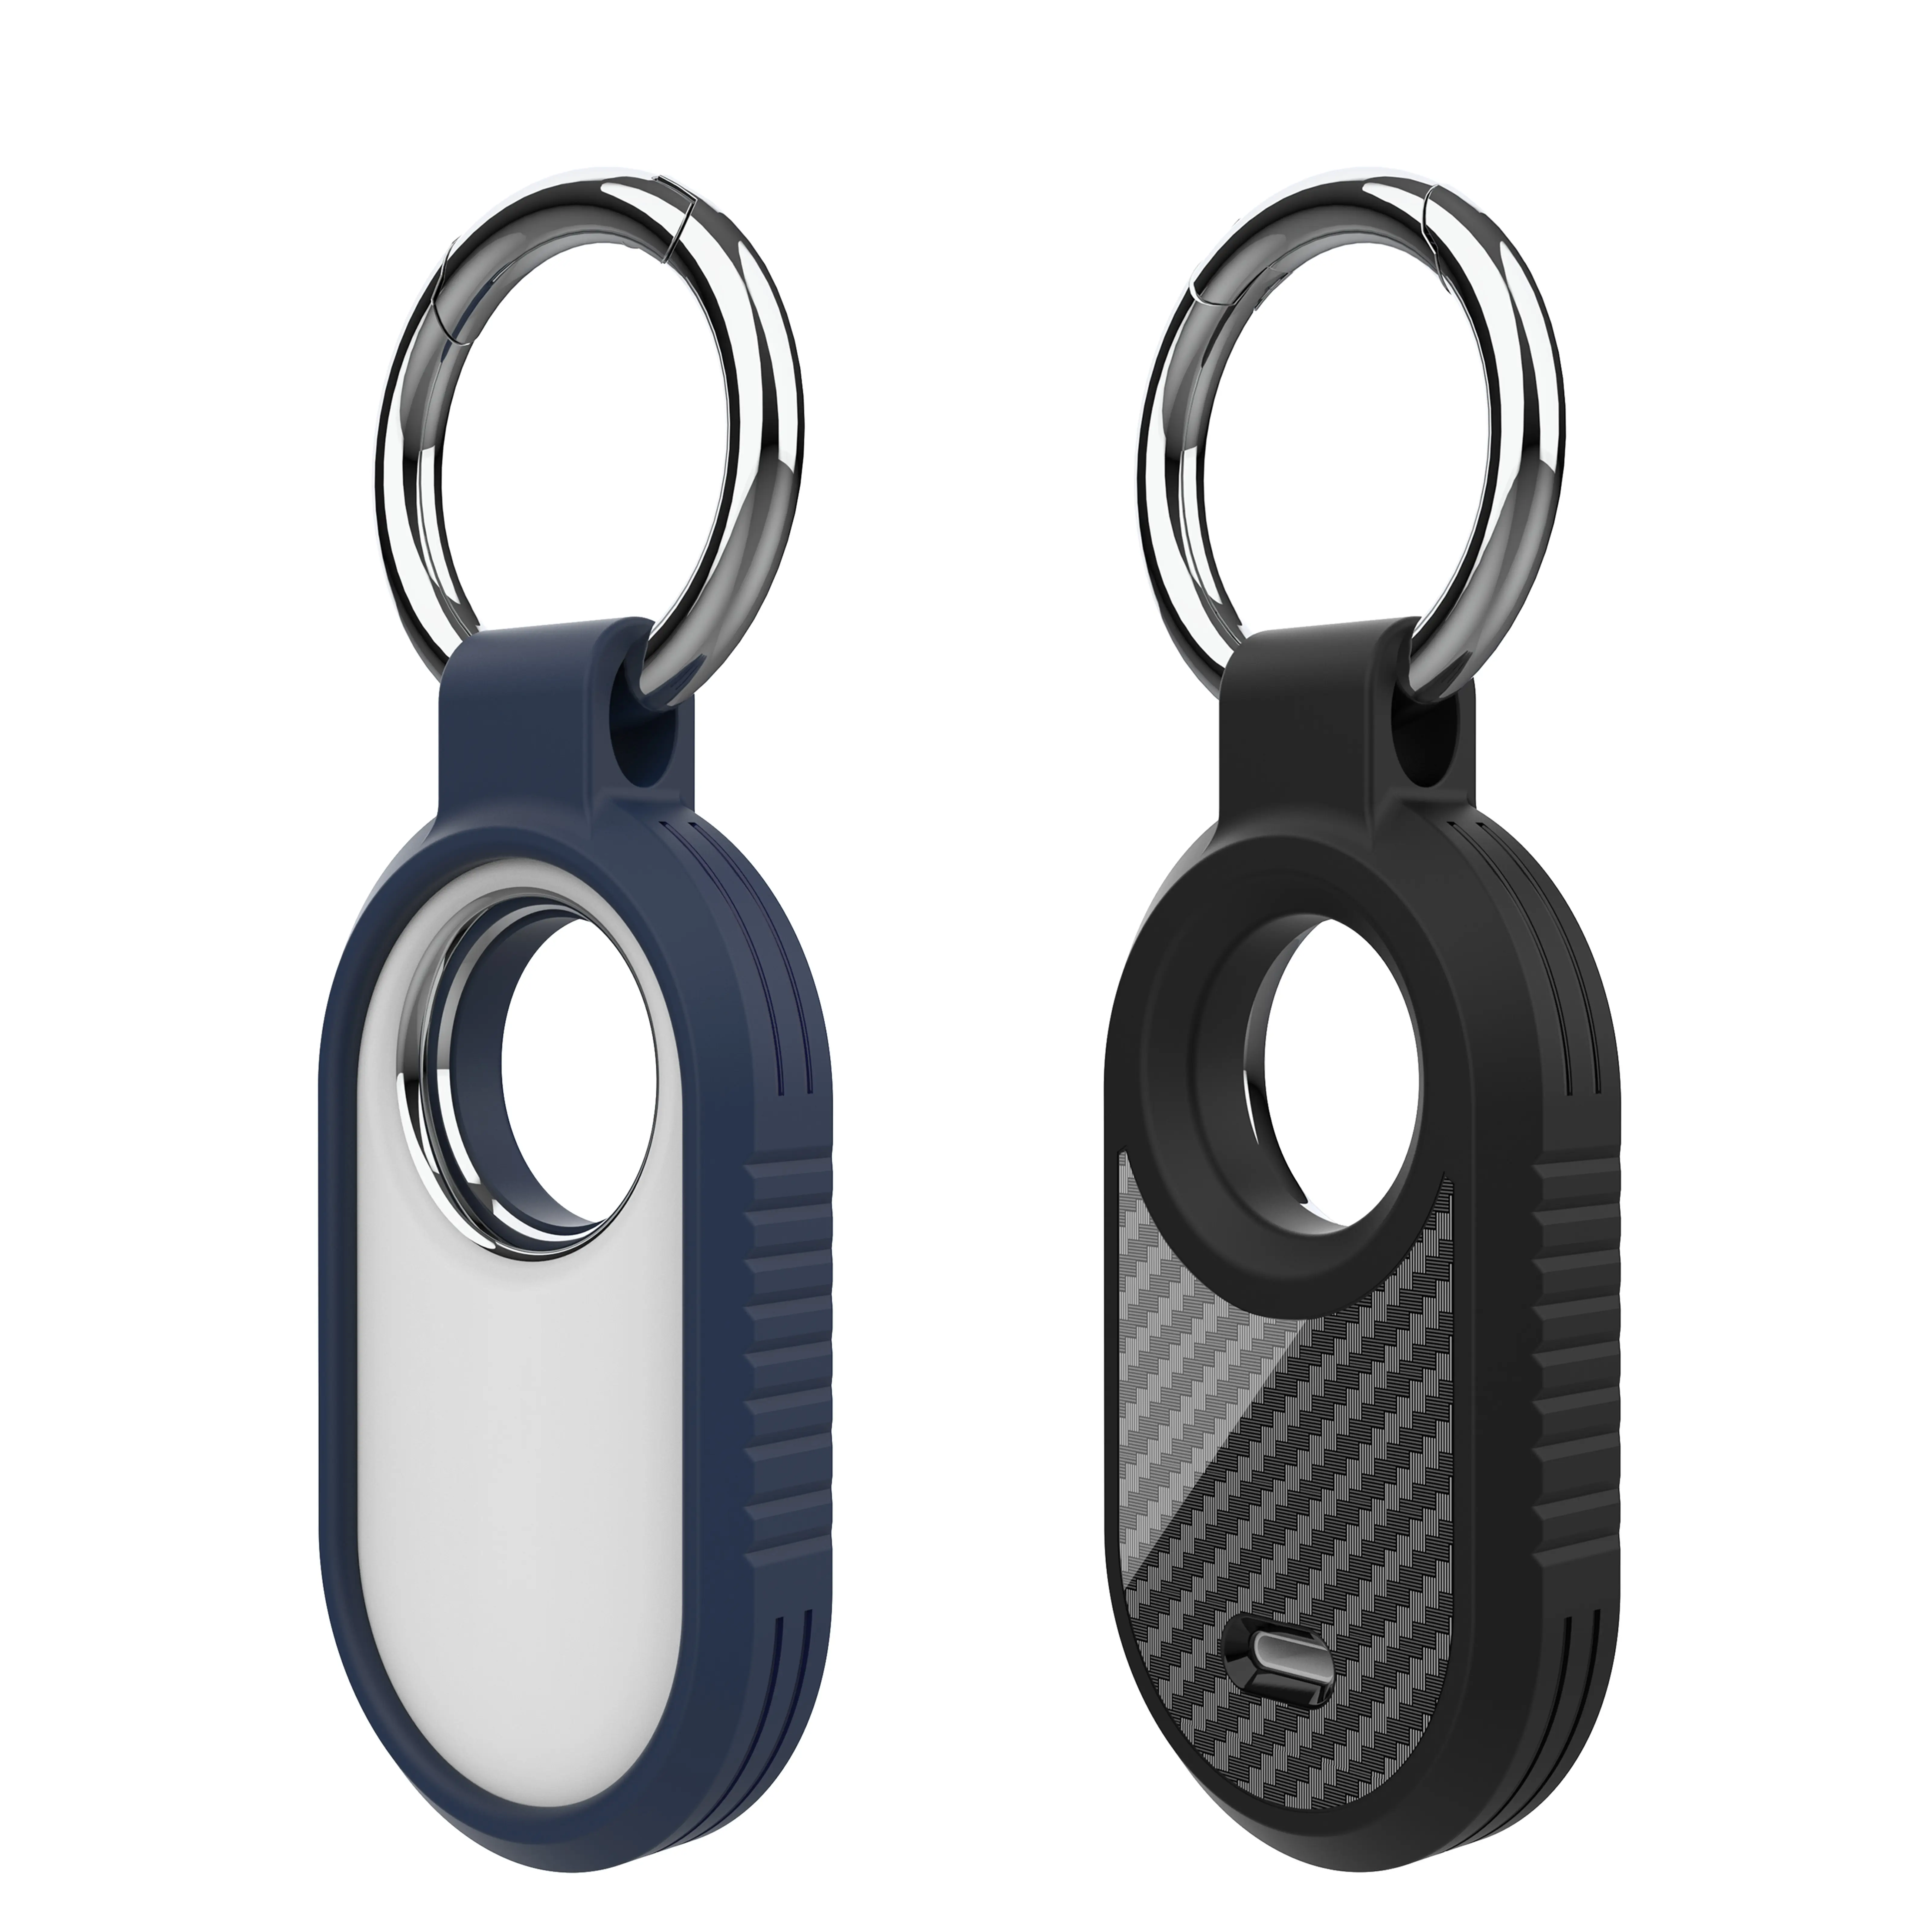 Casing pelindung desain TPU baru untuk Samsung Galaxy SmartTag 2 casing gantungan kunci untuk smart tag 2